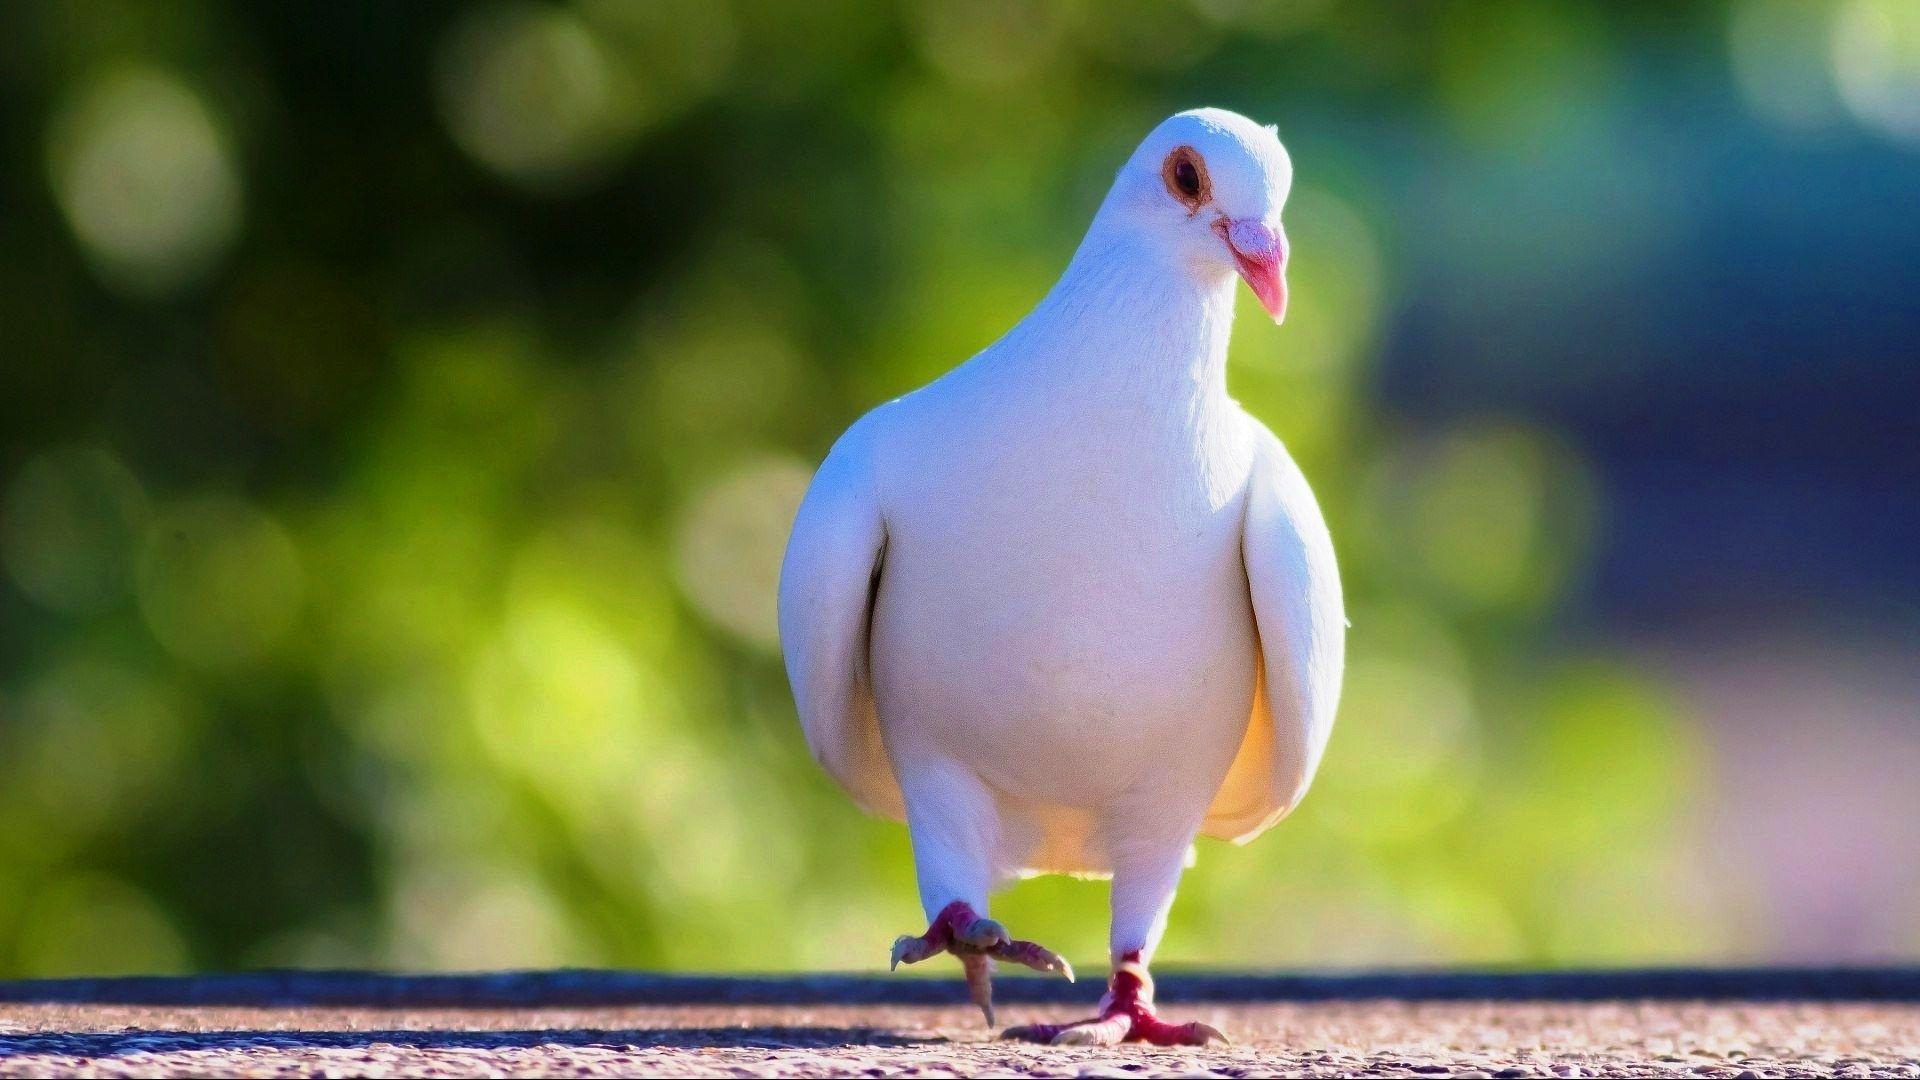 White Pigeon Wallpaper HD Download Of Beautiful Bird